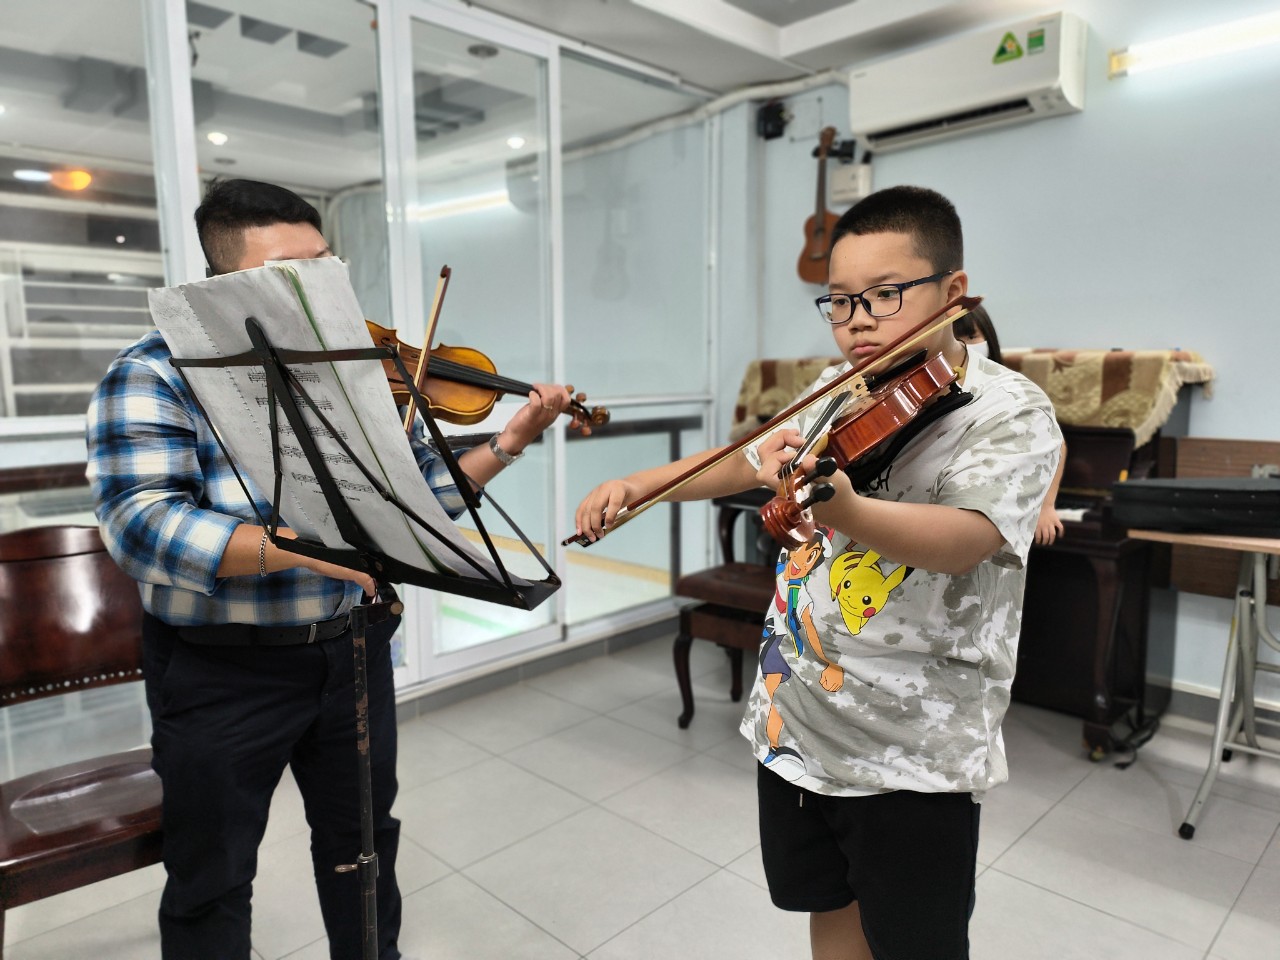 lớp học violin cho thiếu nhi tphcm